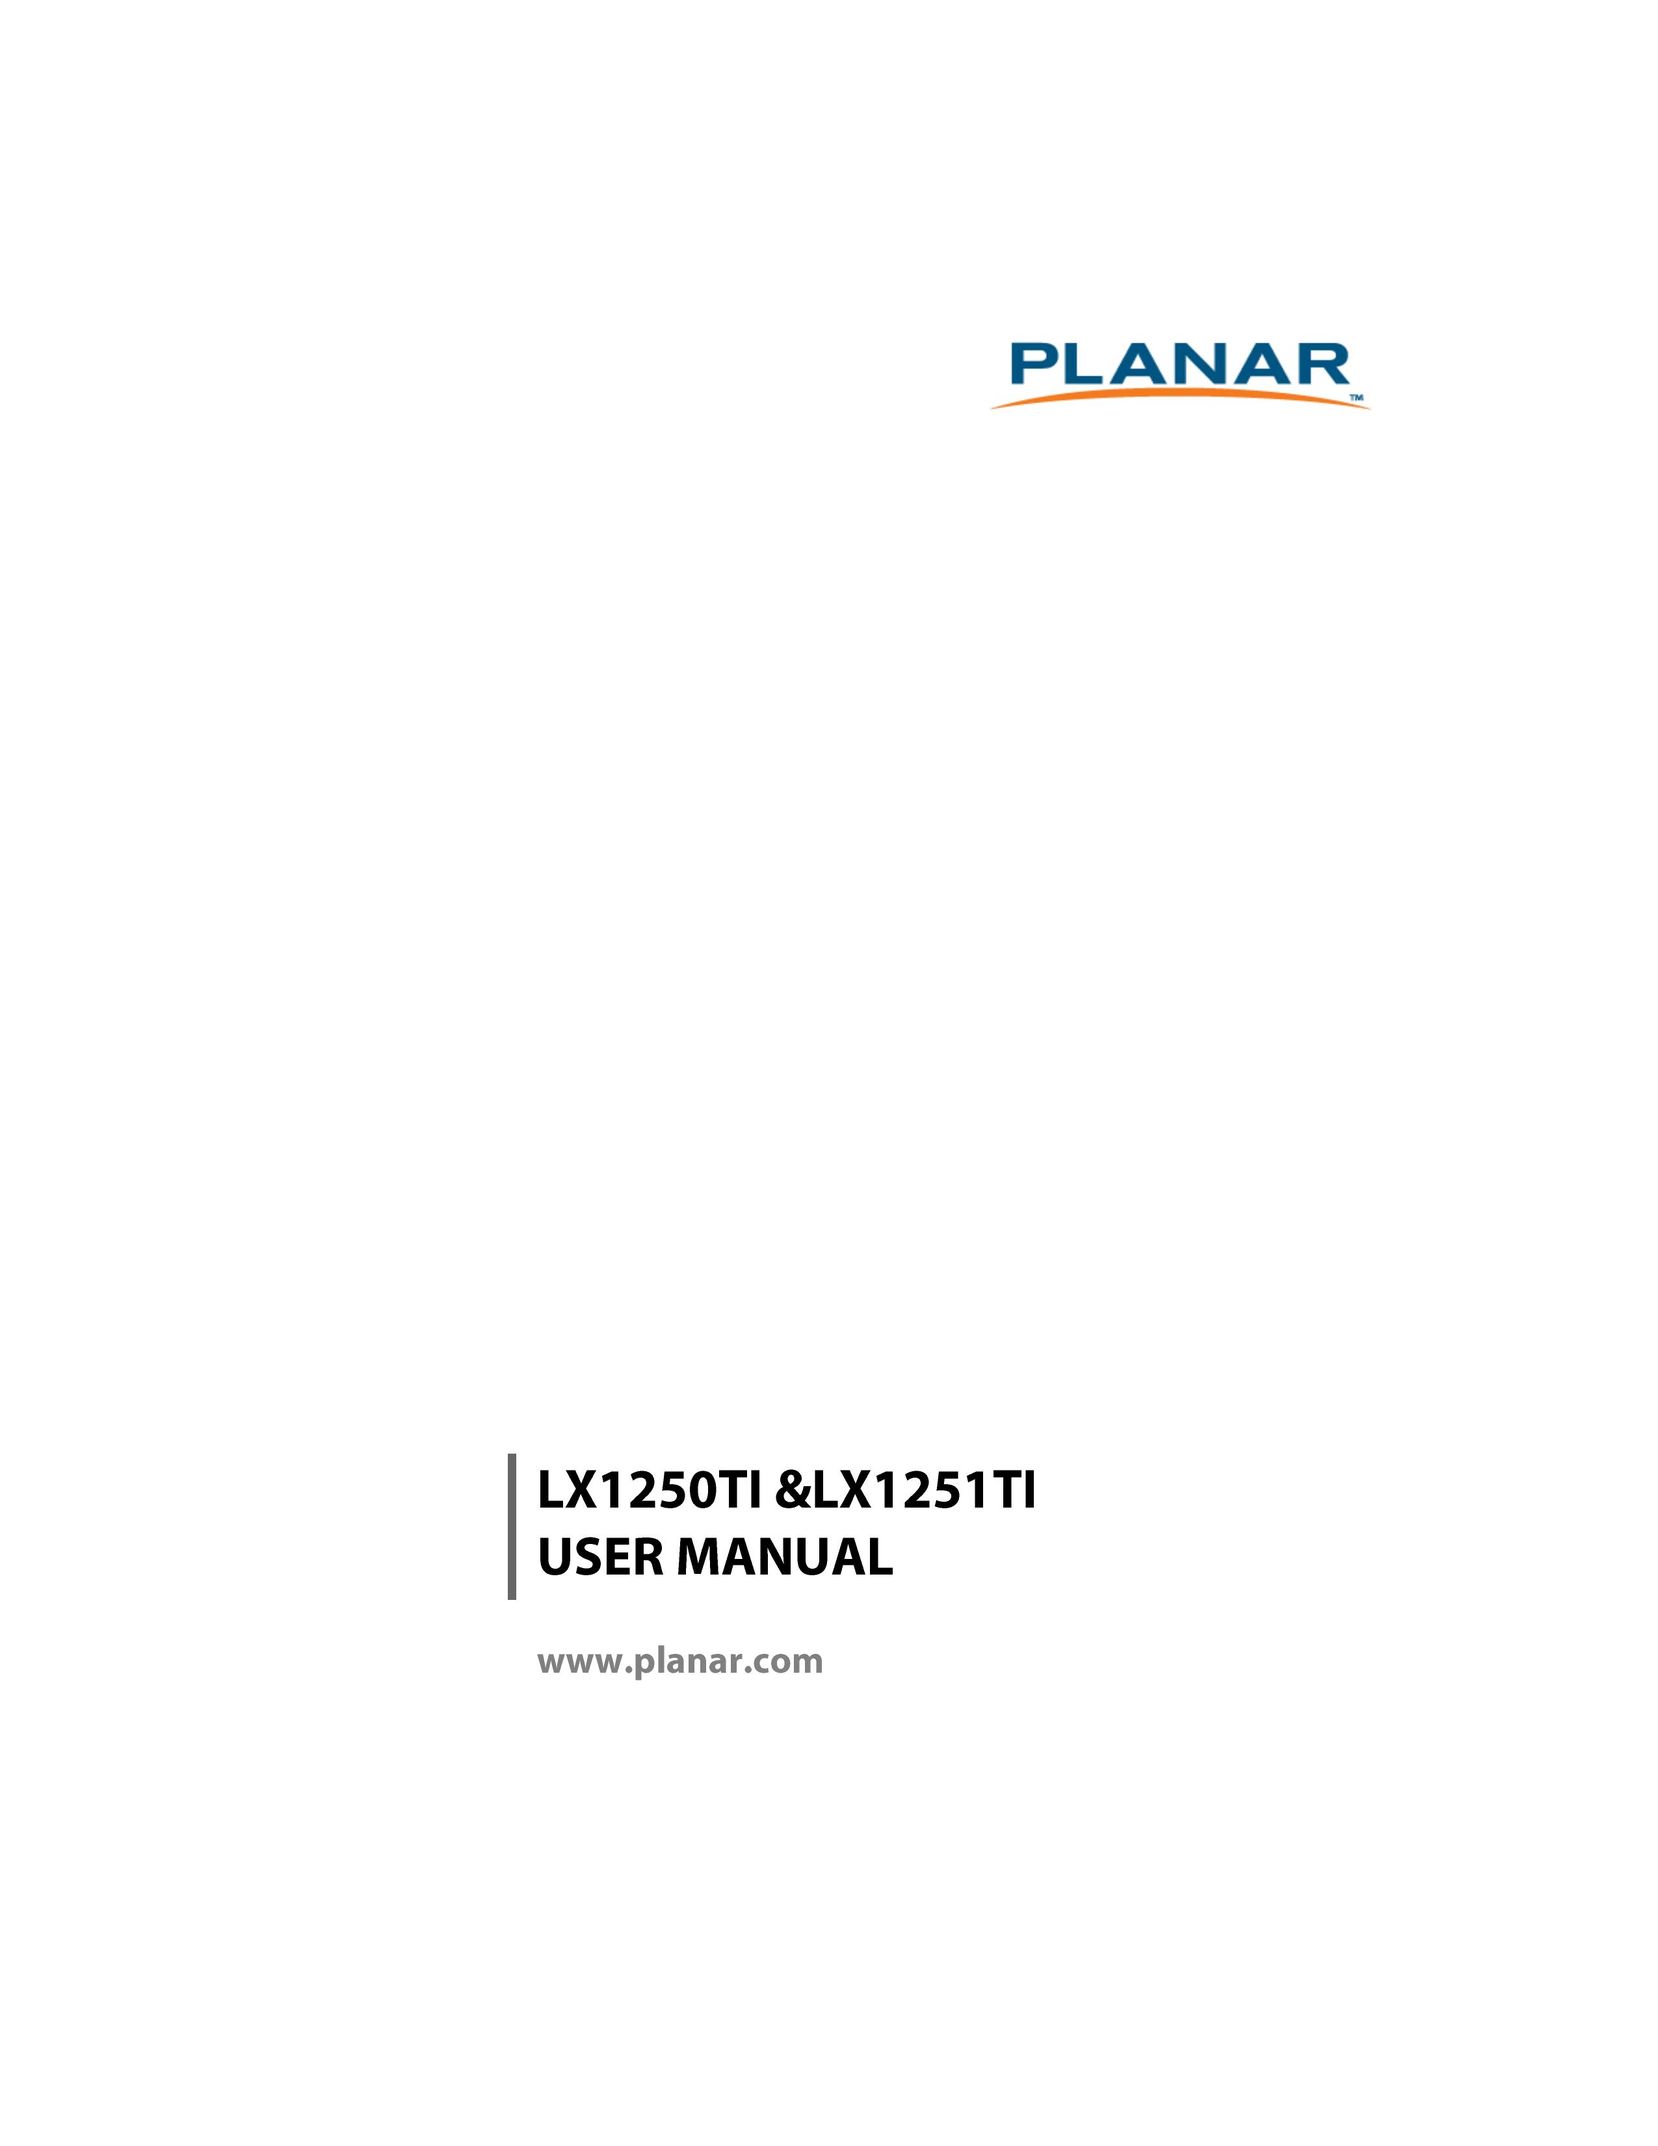 Planar LX1250TI Car Video System User Manual